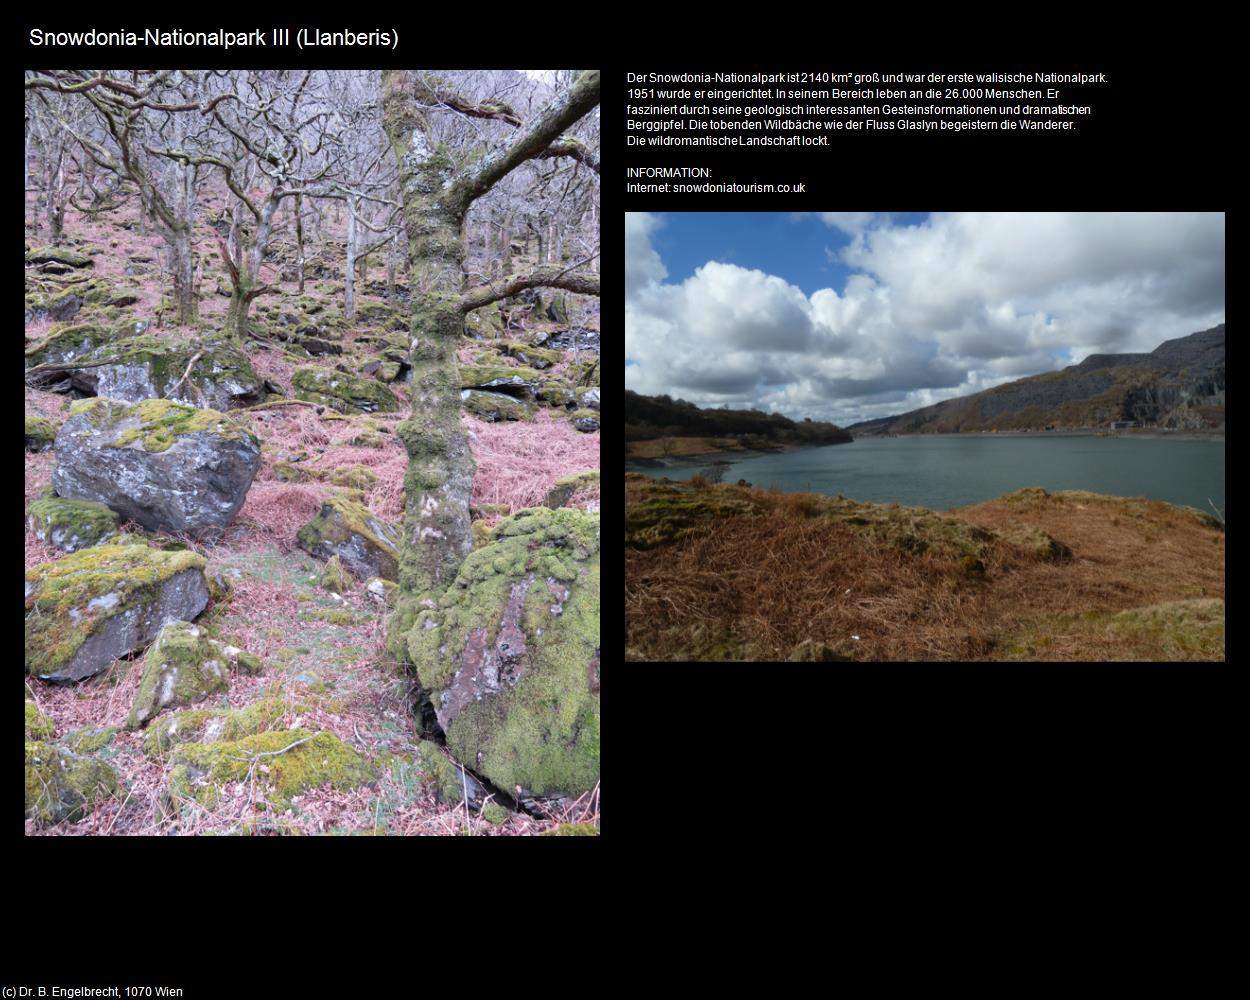 Snowdonia-Nationalpark III  (Llanberis, Wales) in Kulturatlas-ENGLAND und WALES